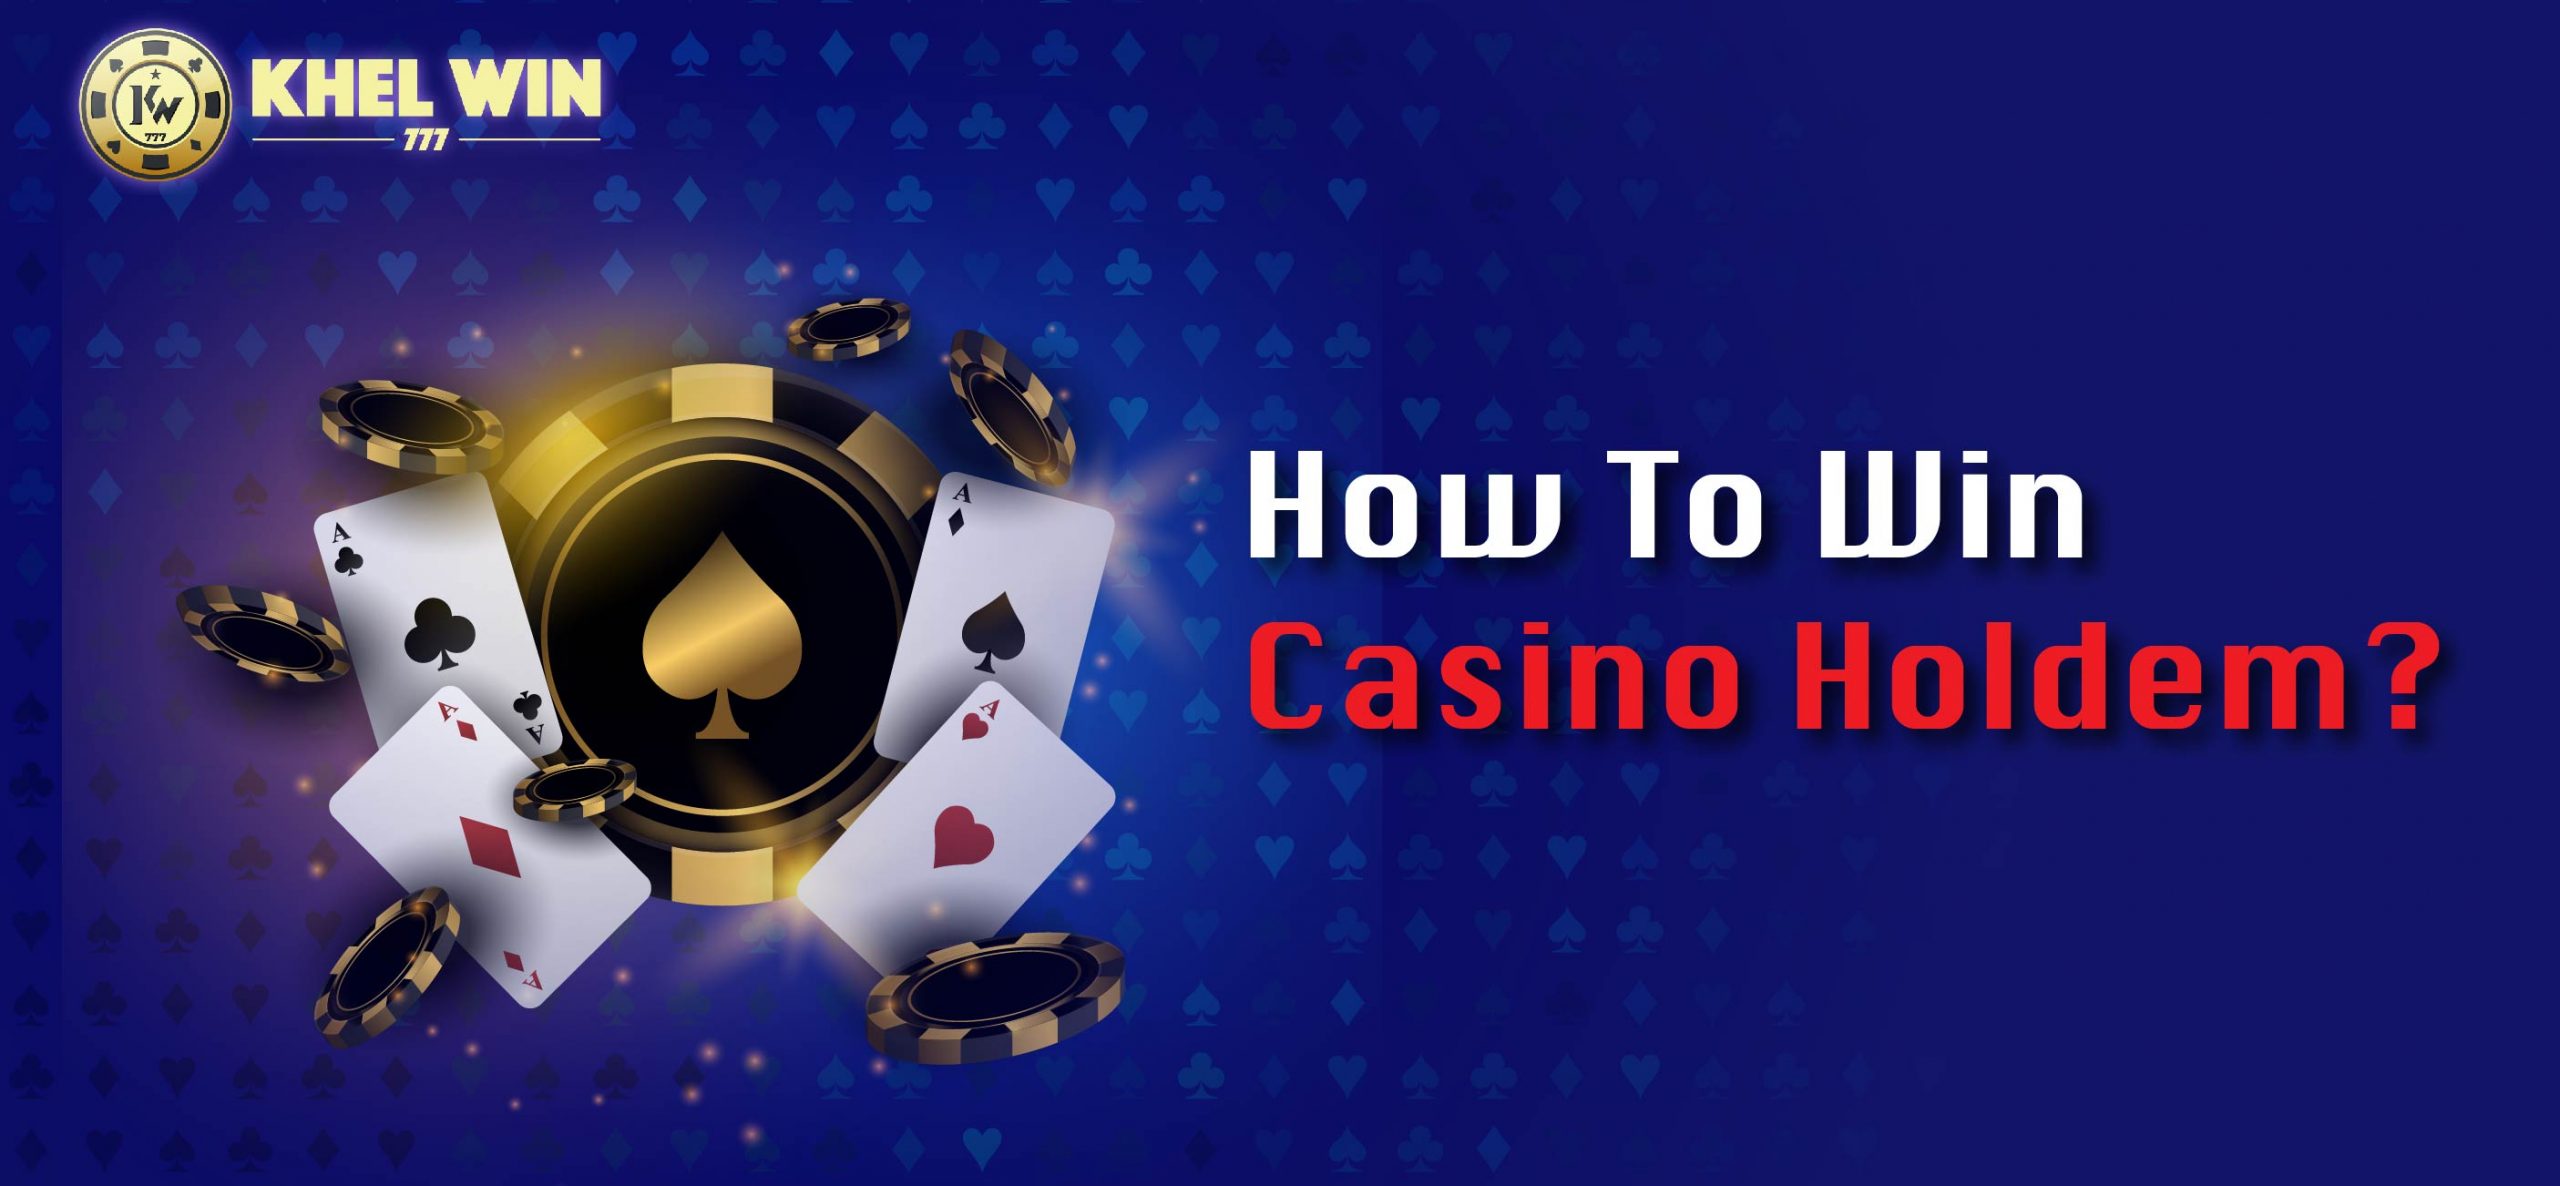 How to win casino holdem?